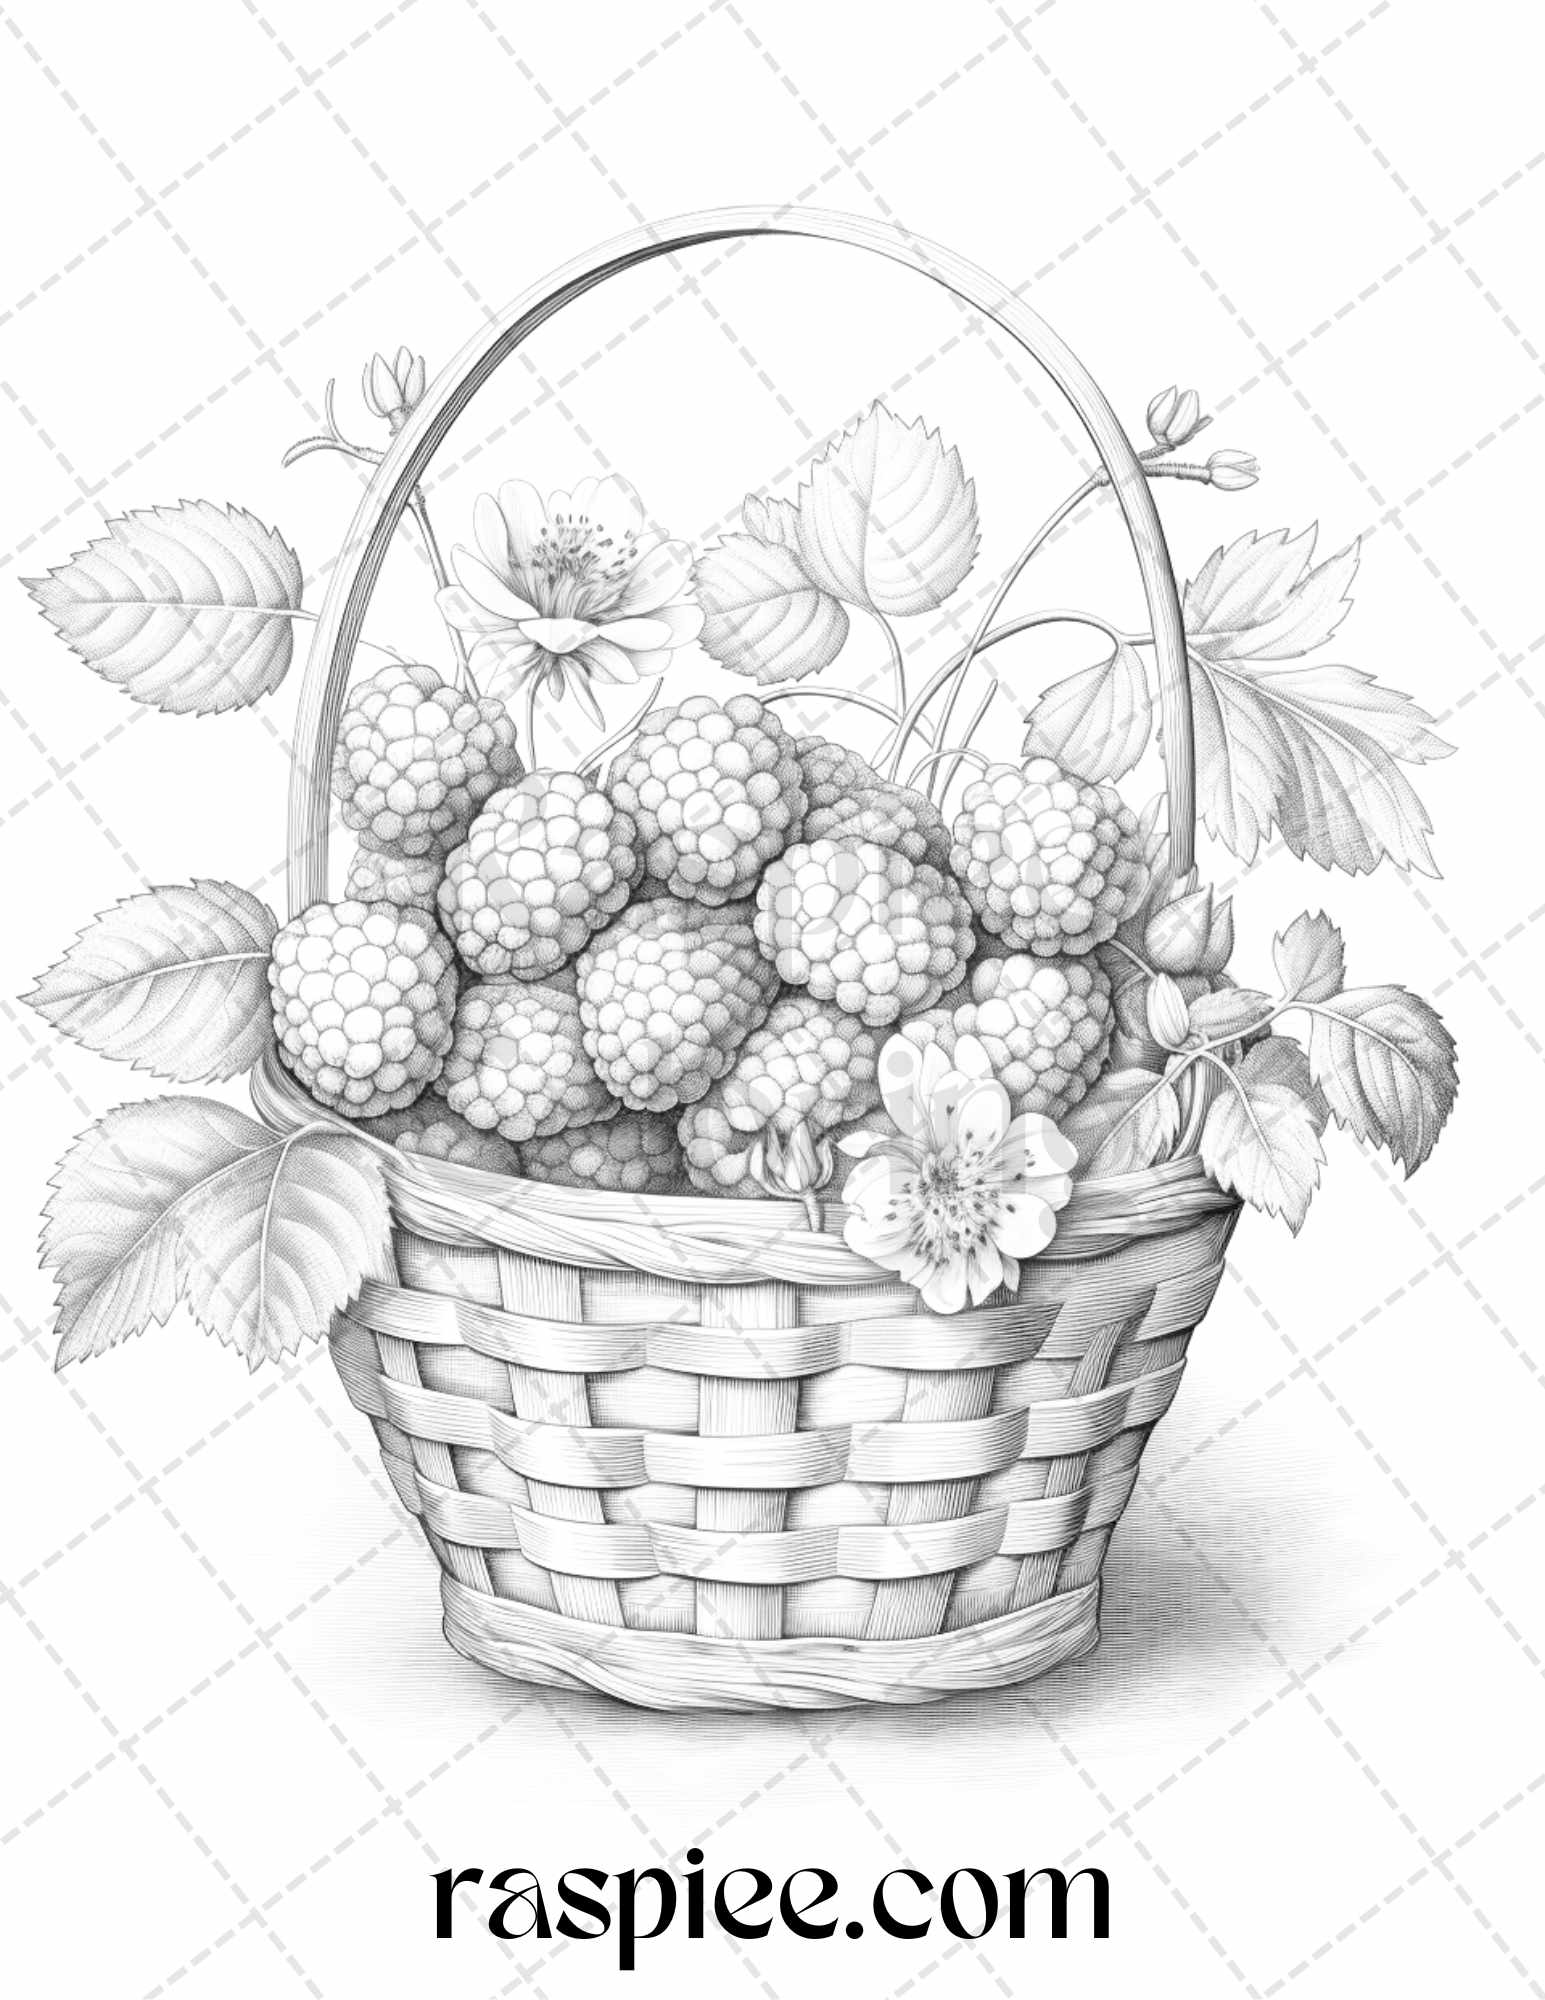 Fruits in basket sketch stock image. Image of face, sketch - 196566913